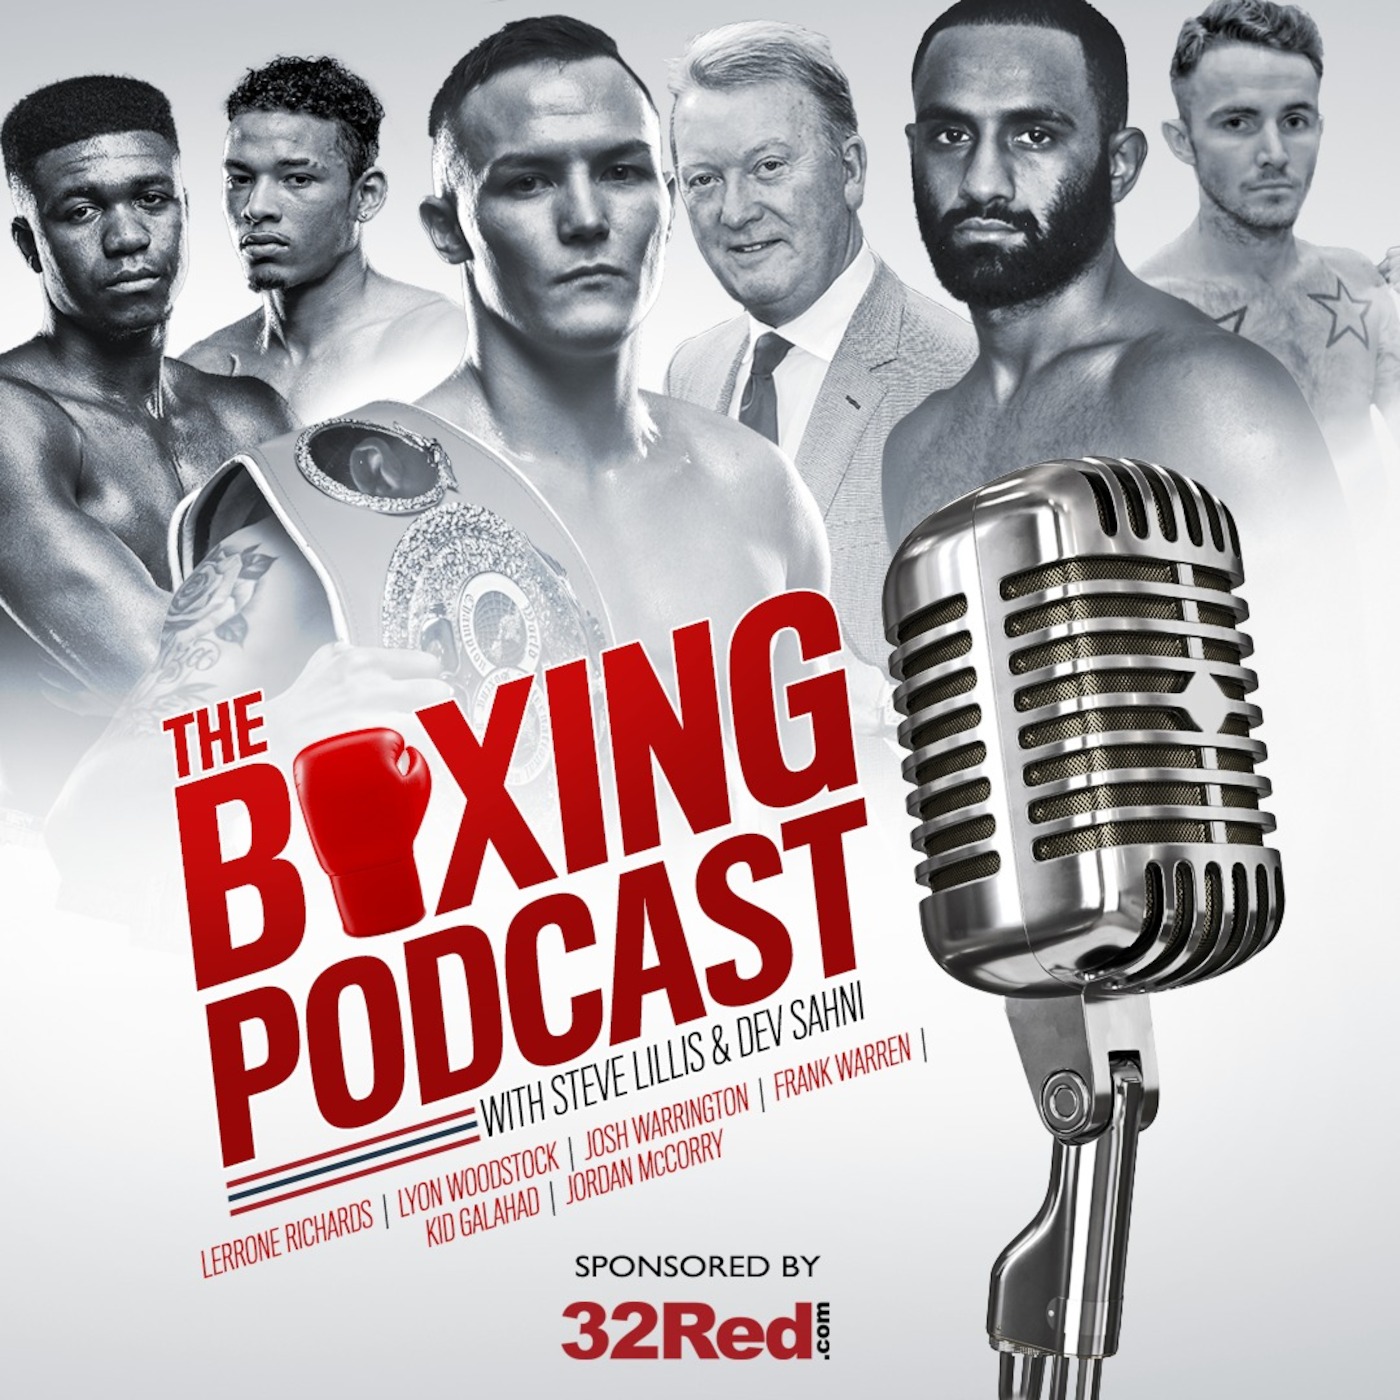 The Boxing Podcast | Episode 13 – WARRINGTON V GALAHAD + Warren, Woodstock, Richards & more